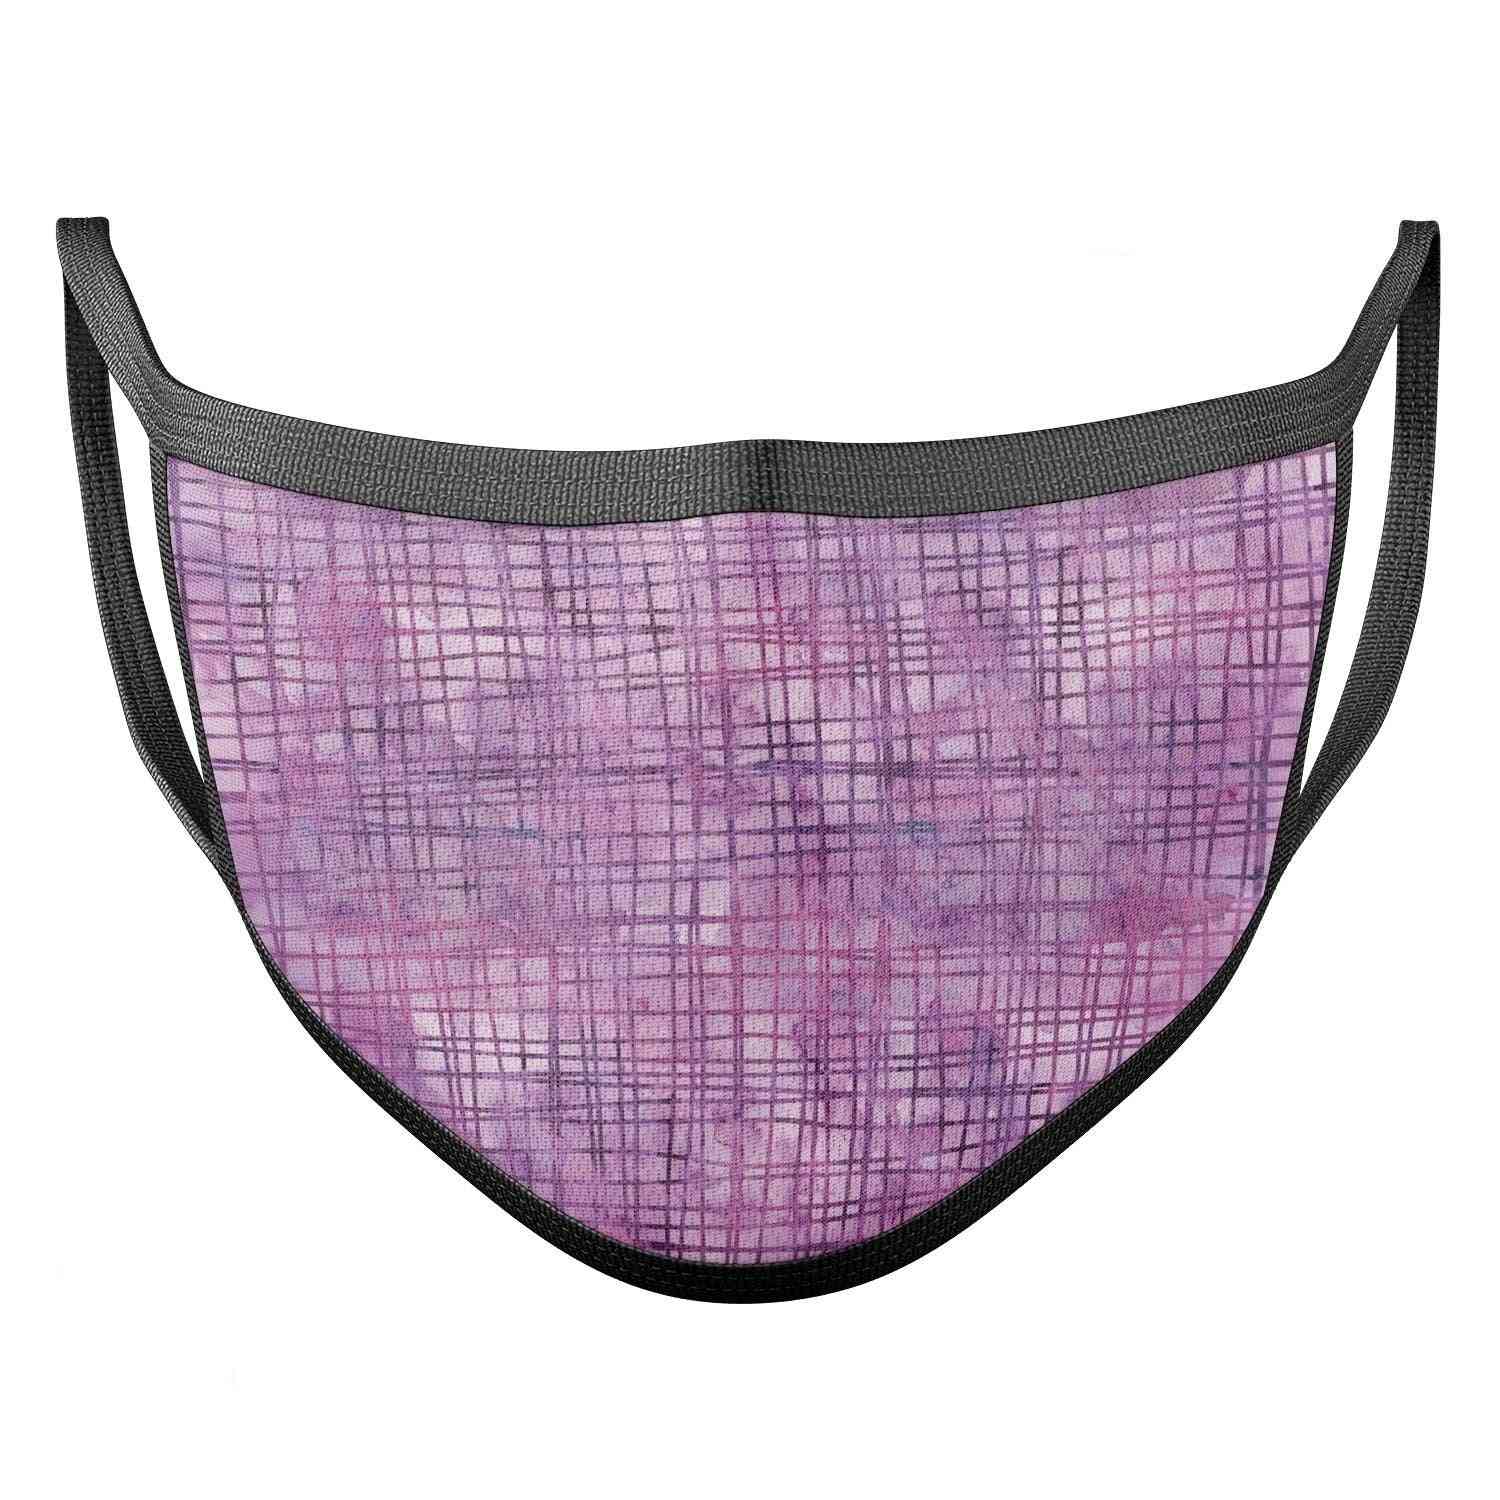 Hachure croisée aquarelle violet - made in usa couvre-bouche unisexe